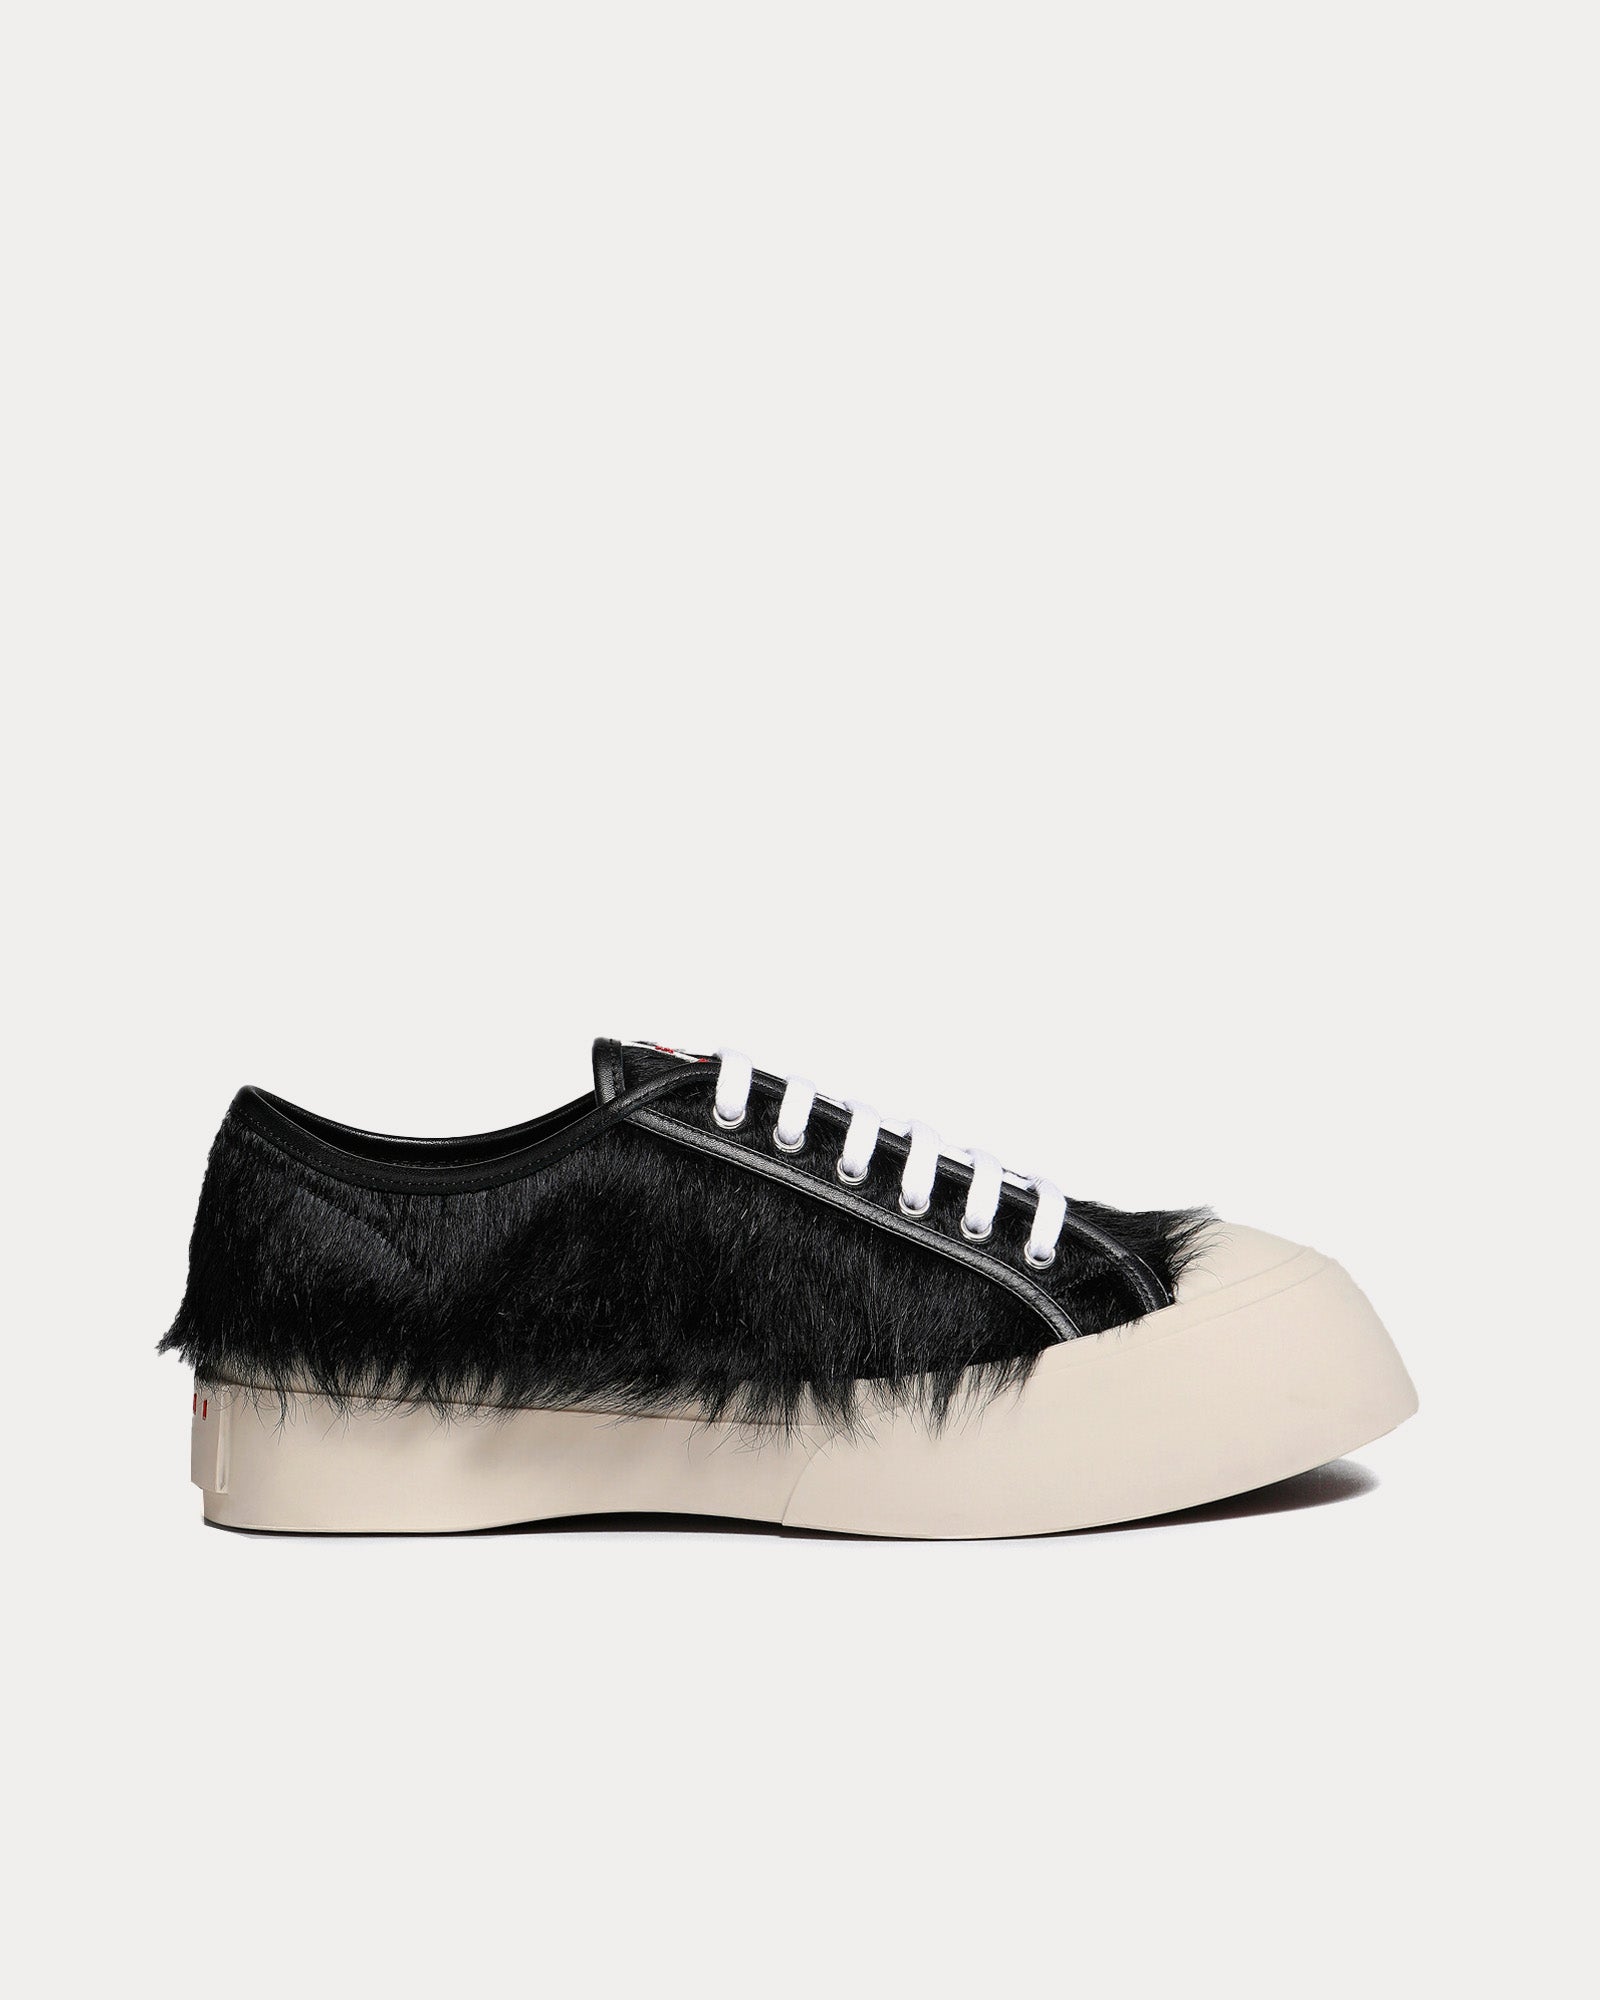 Marni - Pablo Longhair Calfskin Black Low Top Sneakers